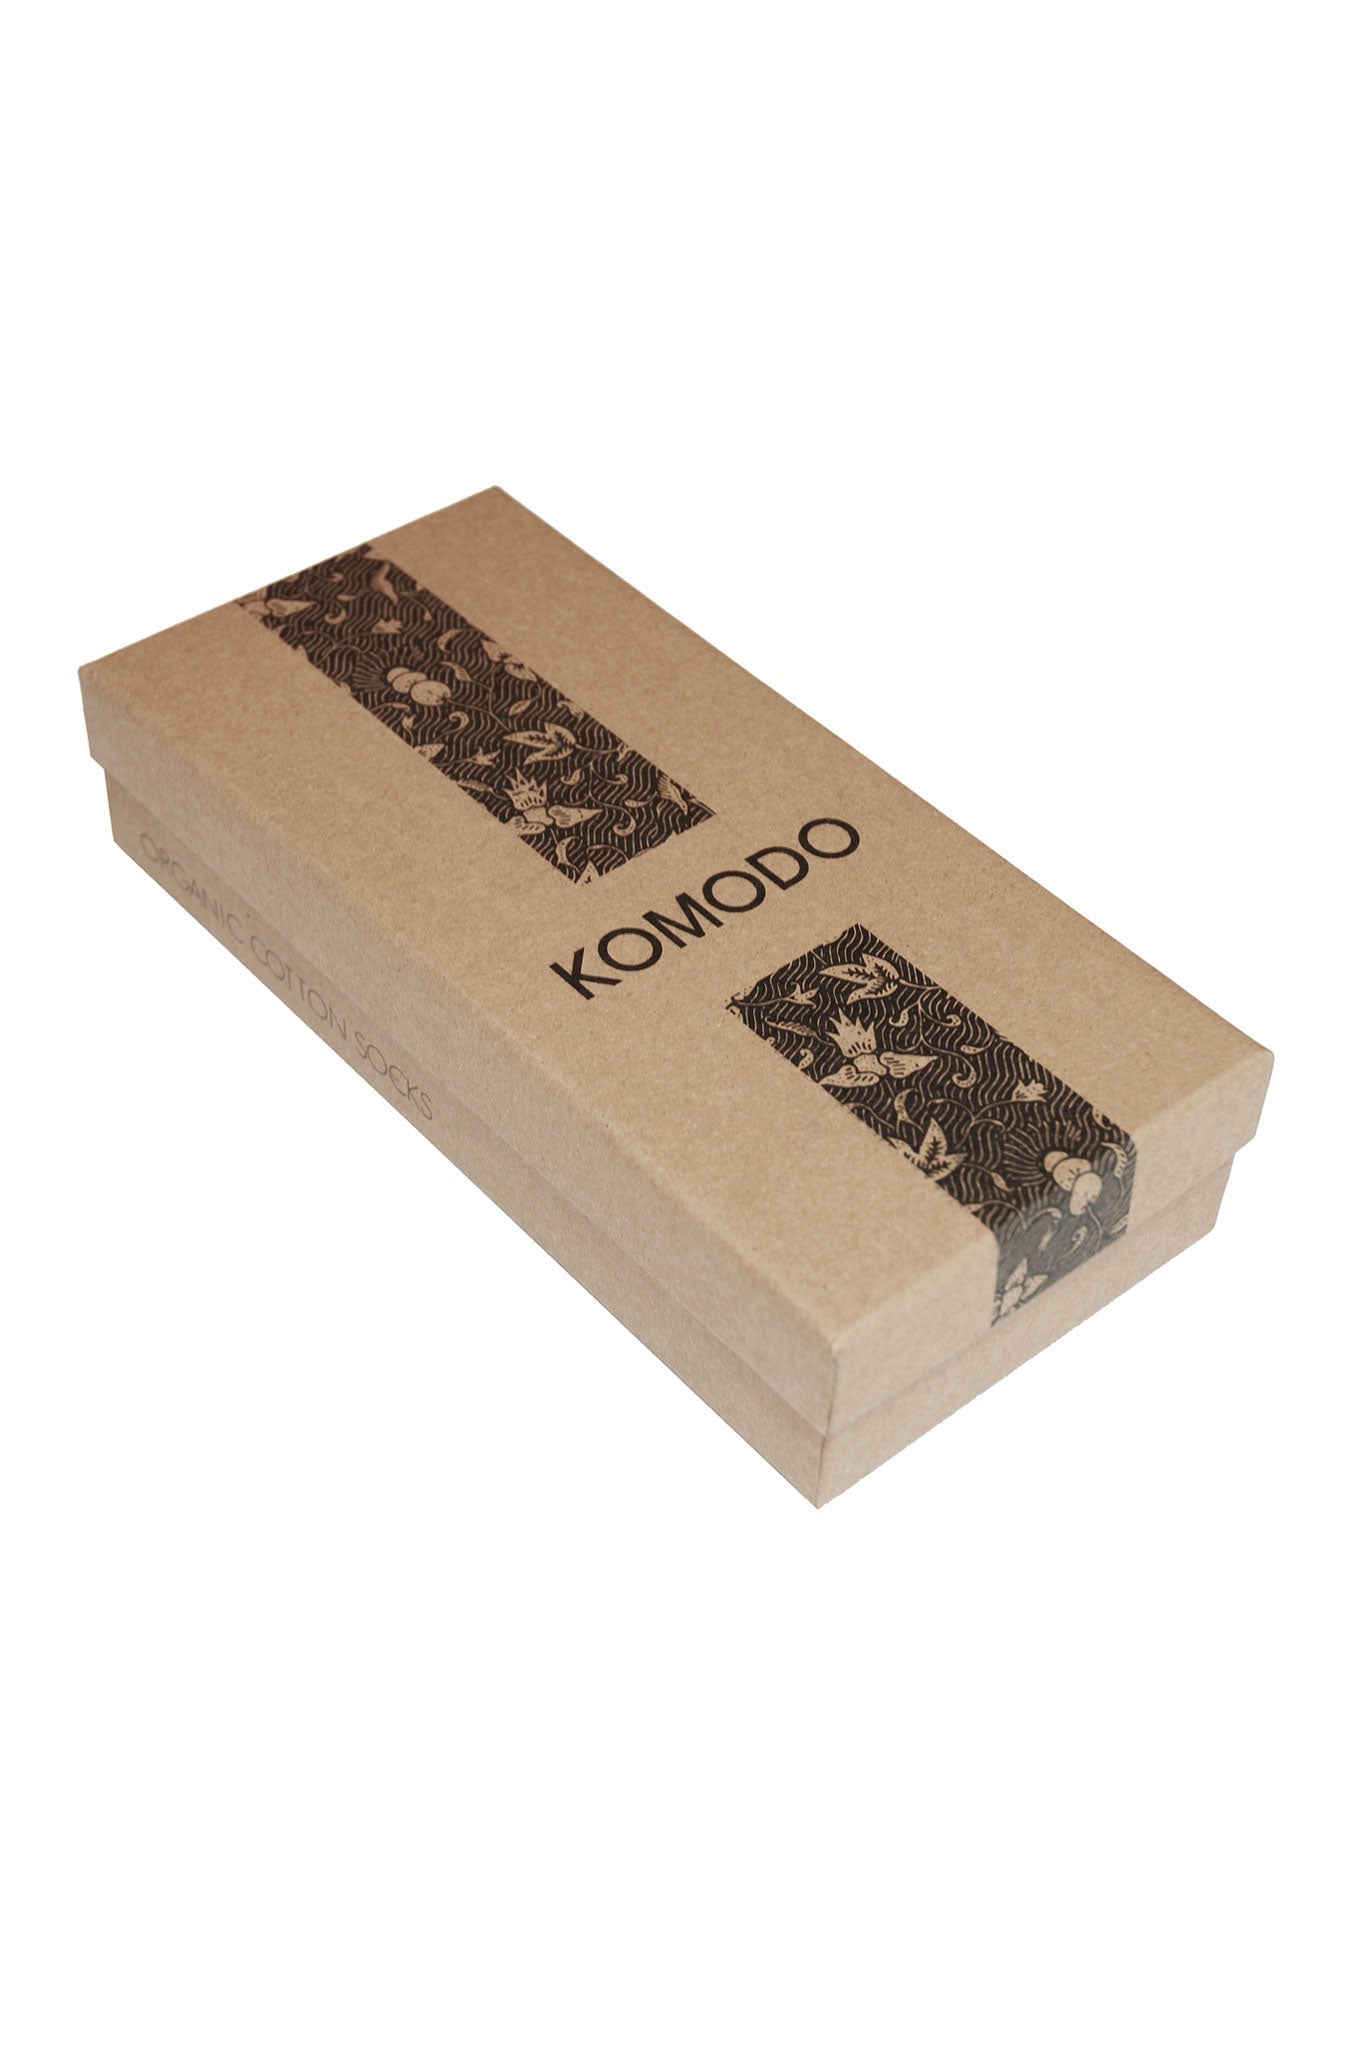 ANKLE Box Set (x3 pairs) - Organic Cotton Socks White